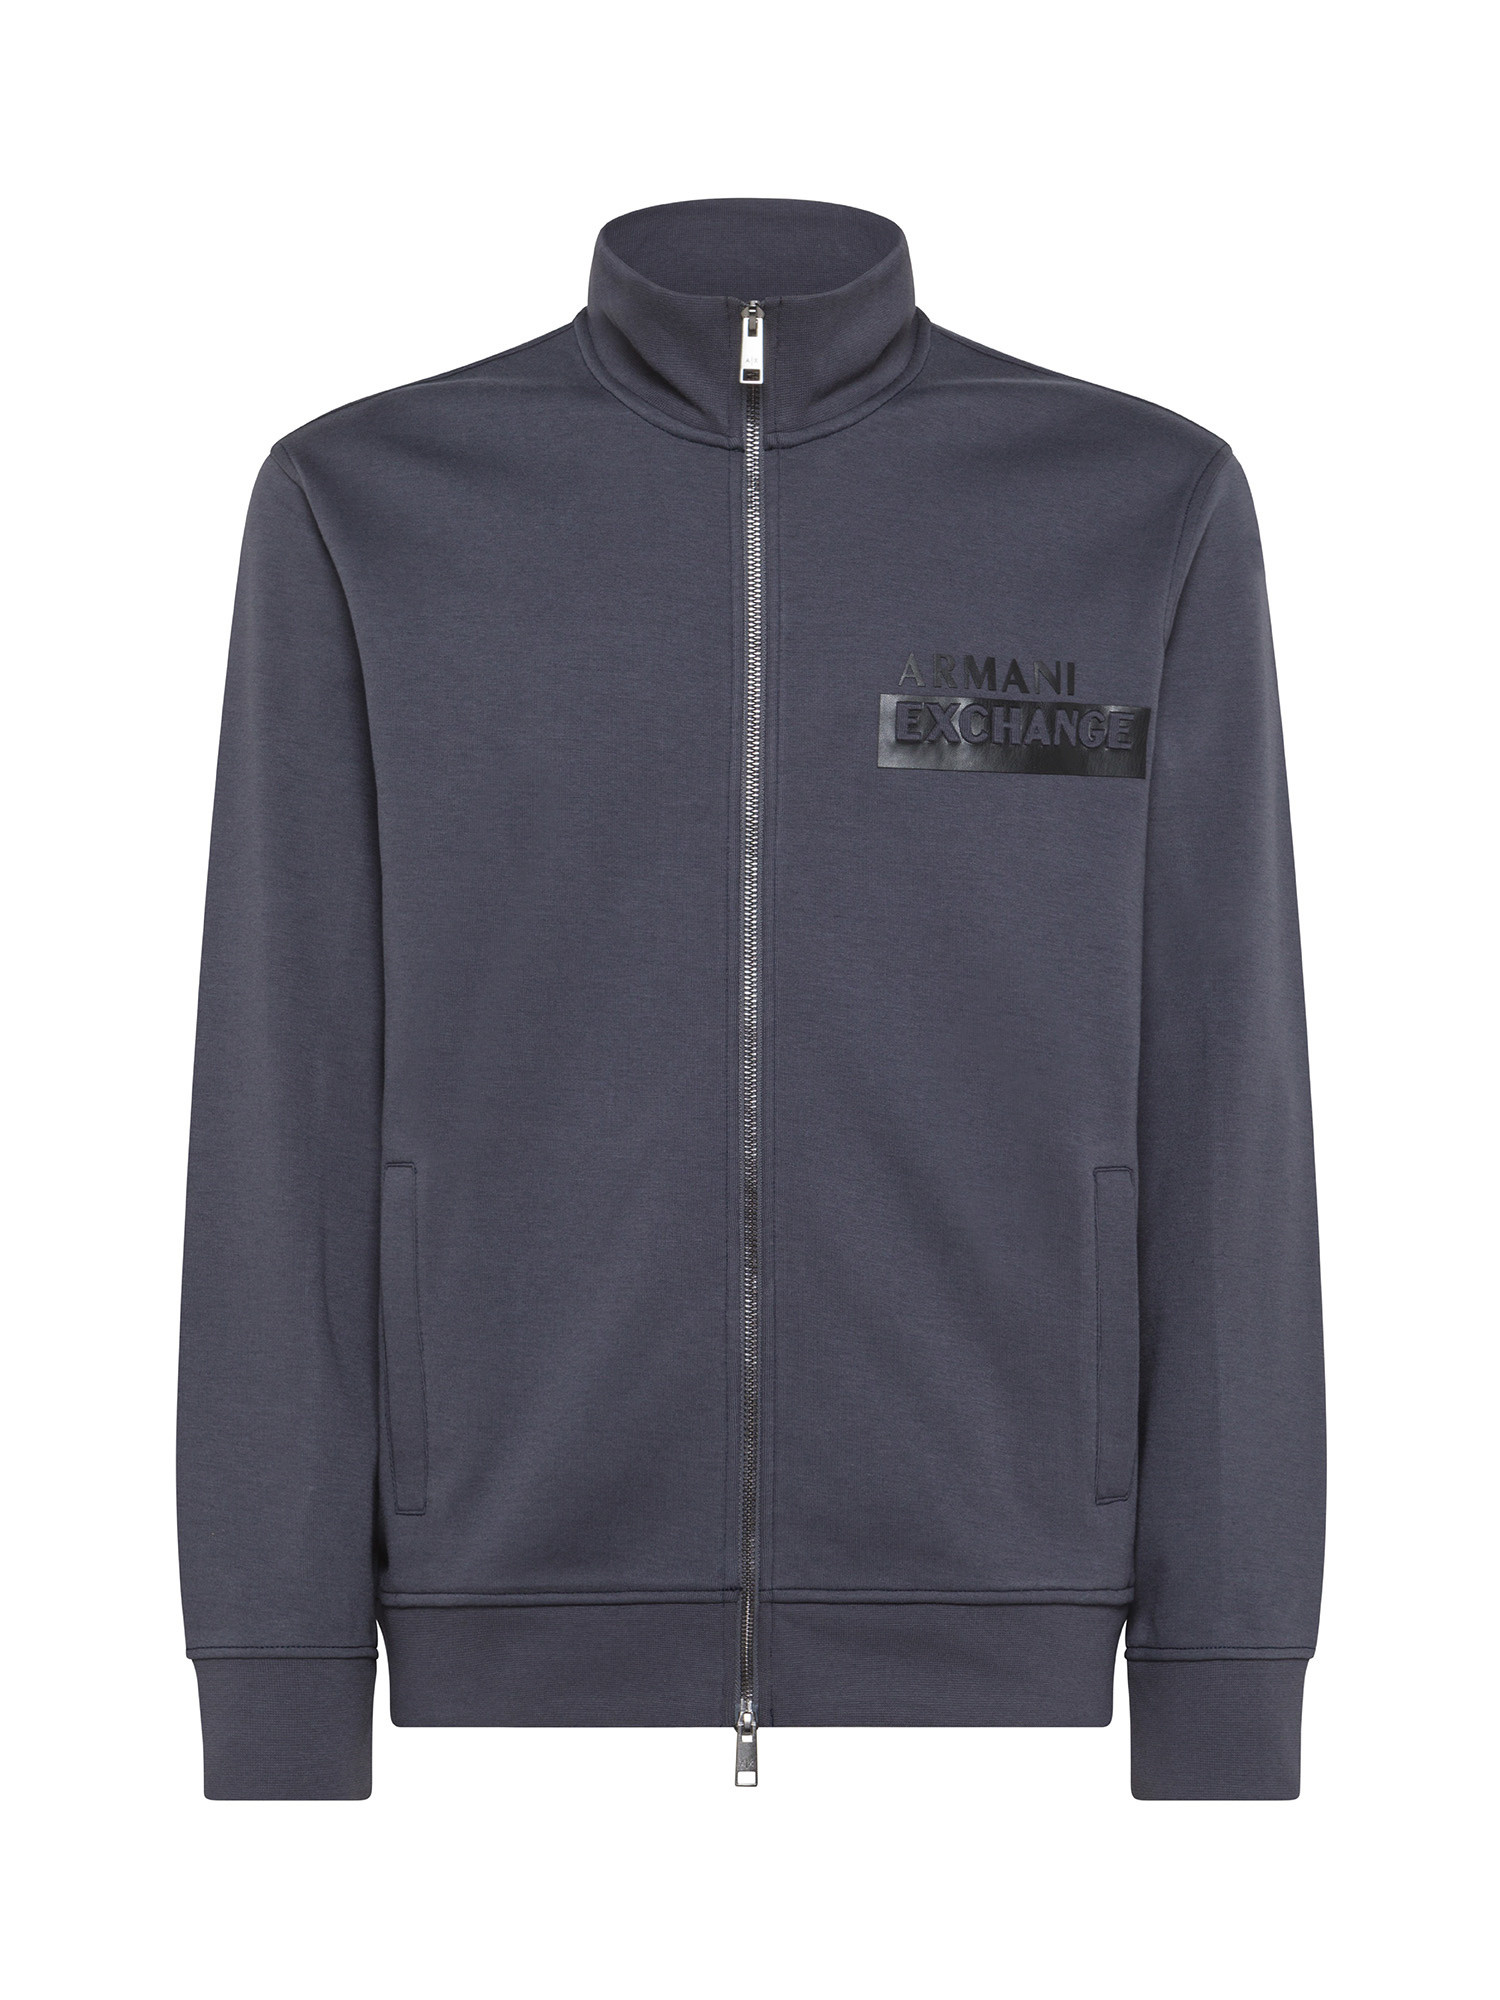 Armani Exchange - Full zip sweatshirt with logo, Dark Grey, large image number 0